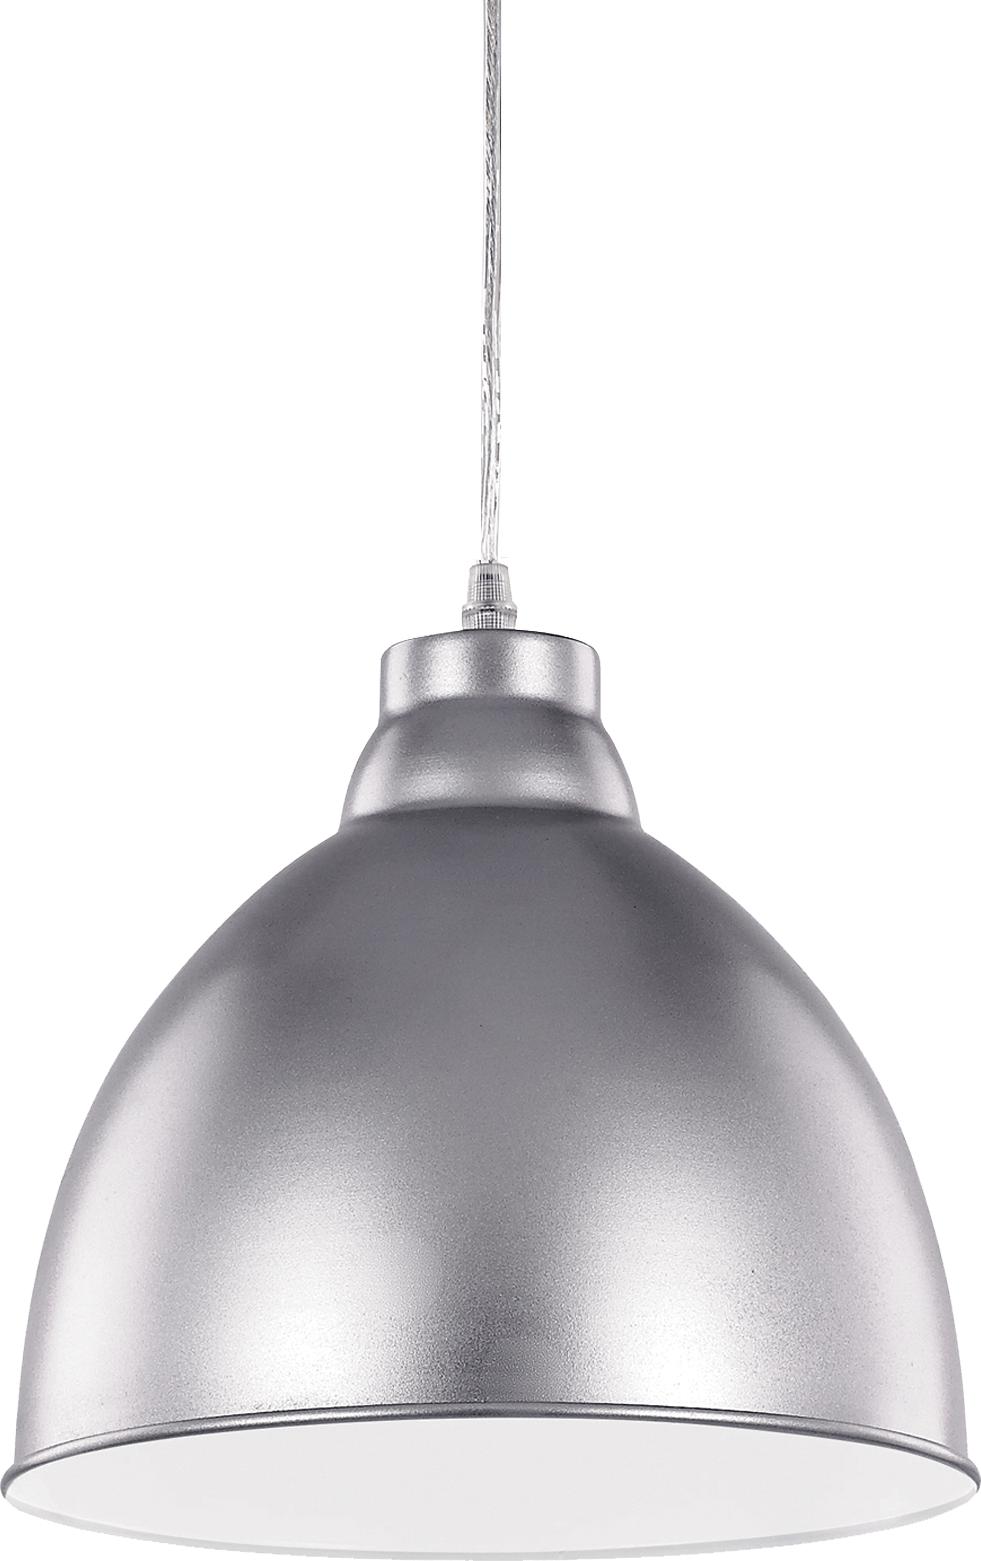 Ideal lux LED Navy alluminio haengende Lampe 5W 20716